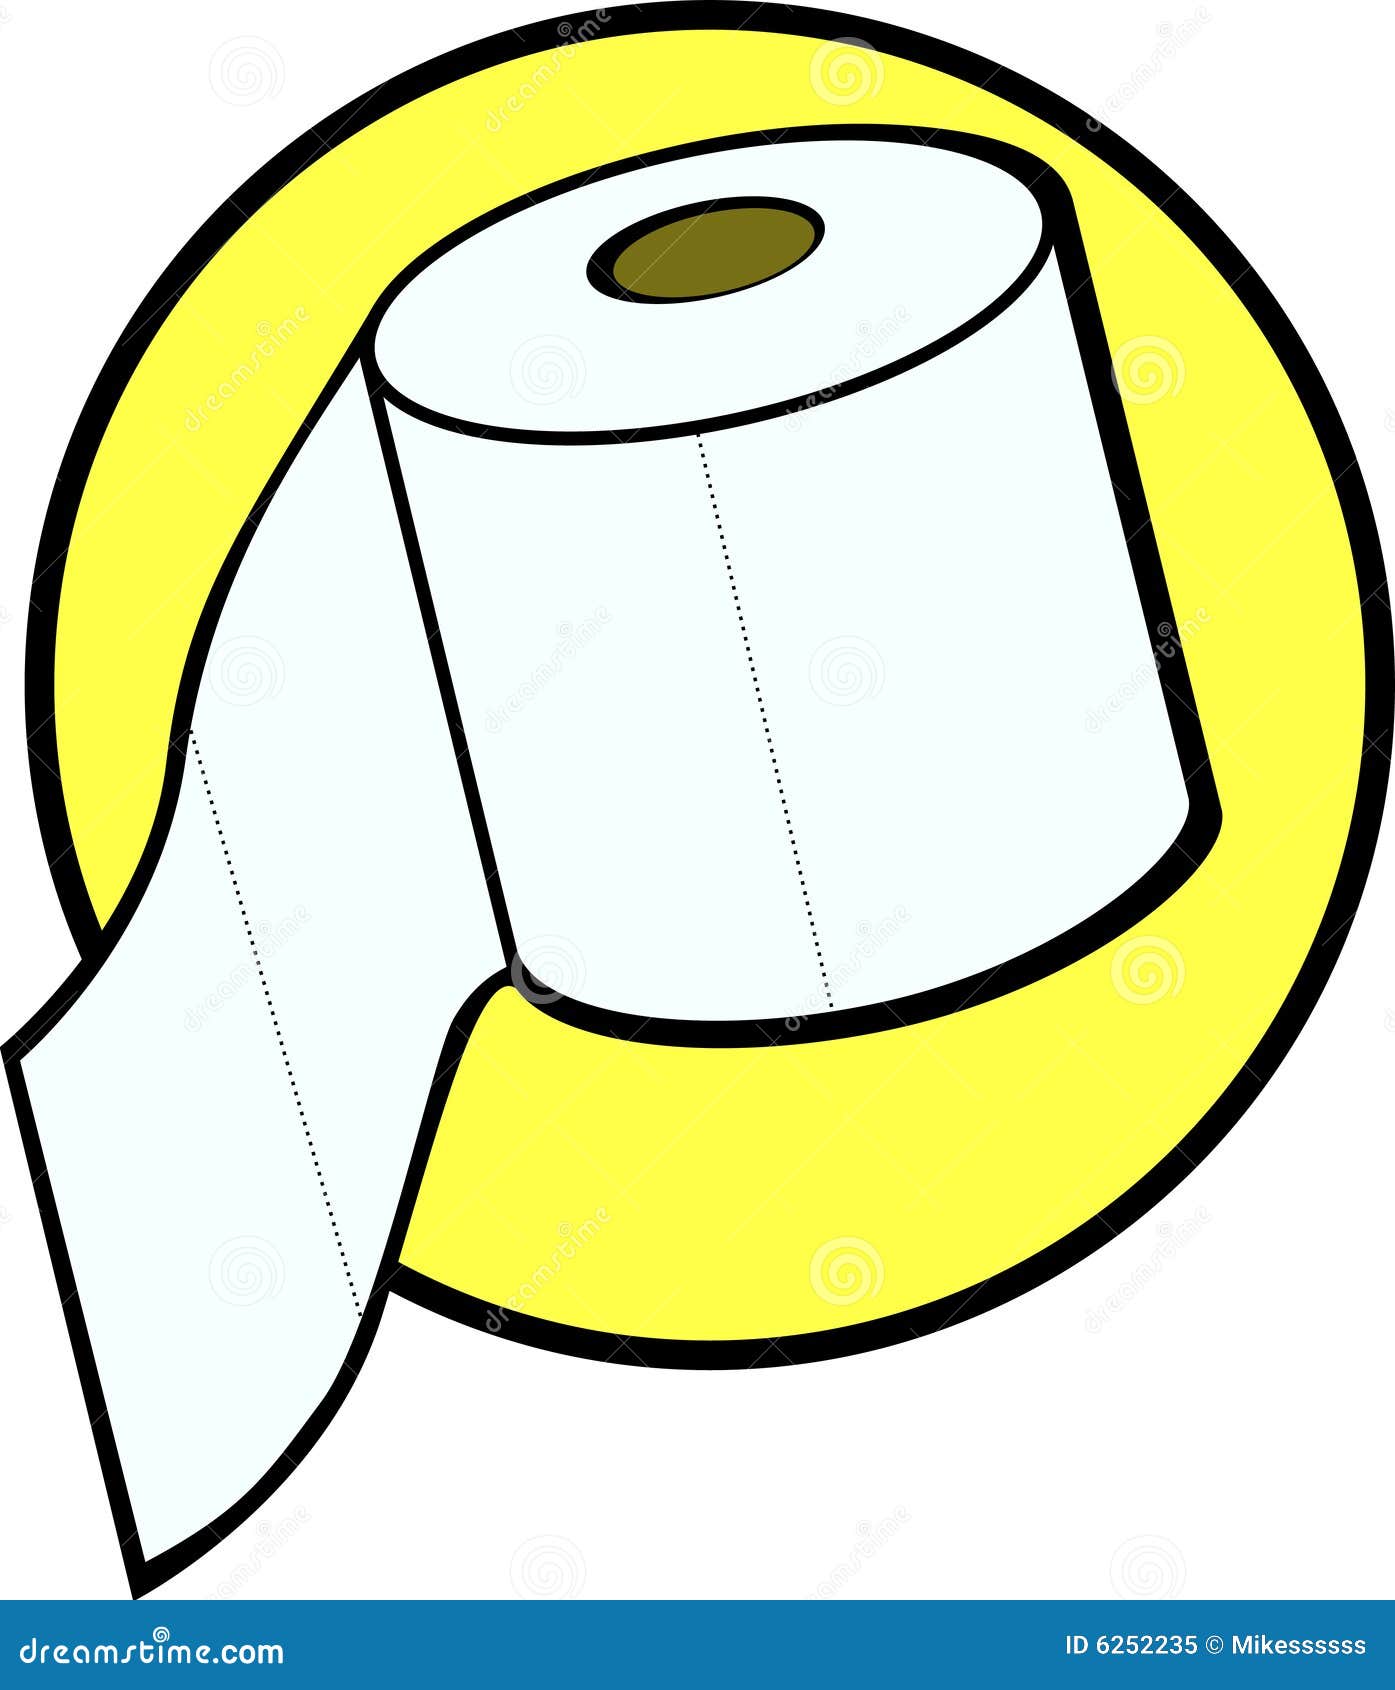 toilet tissue clipart - photo #15